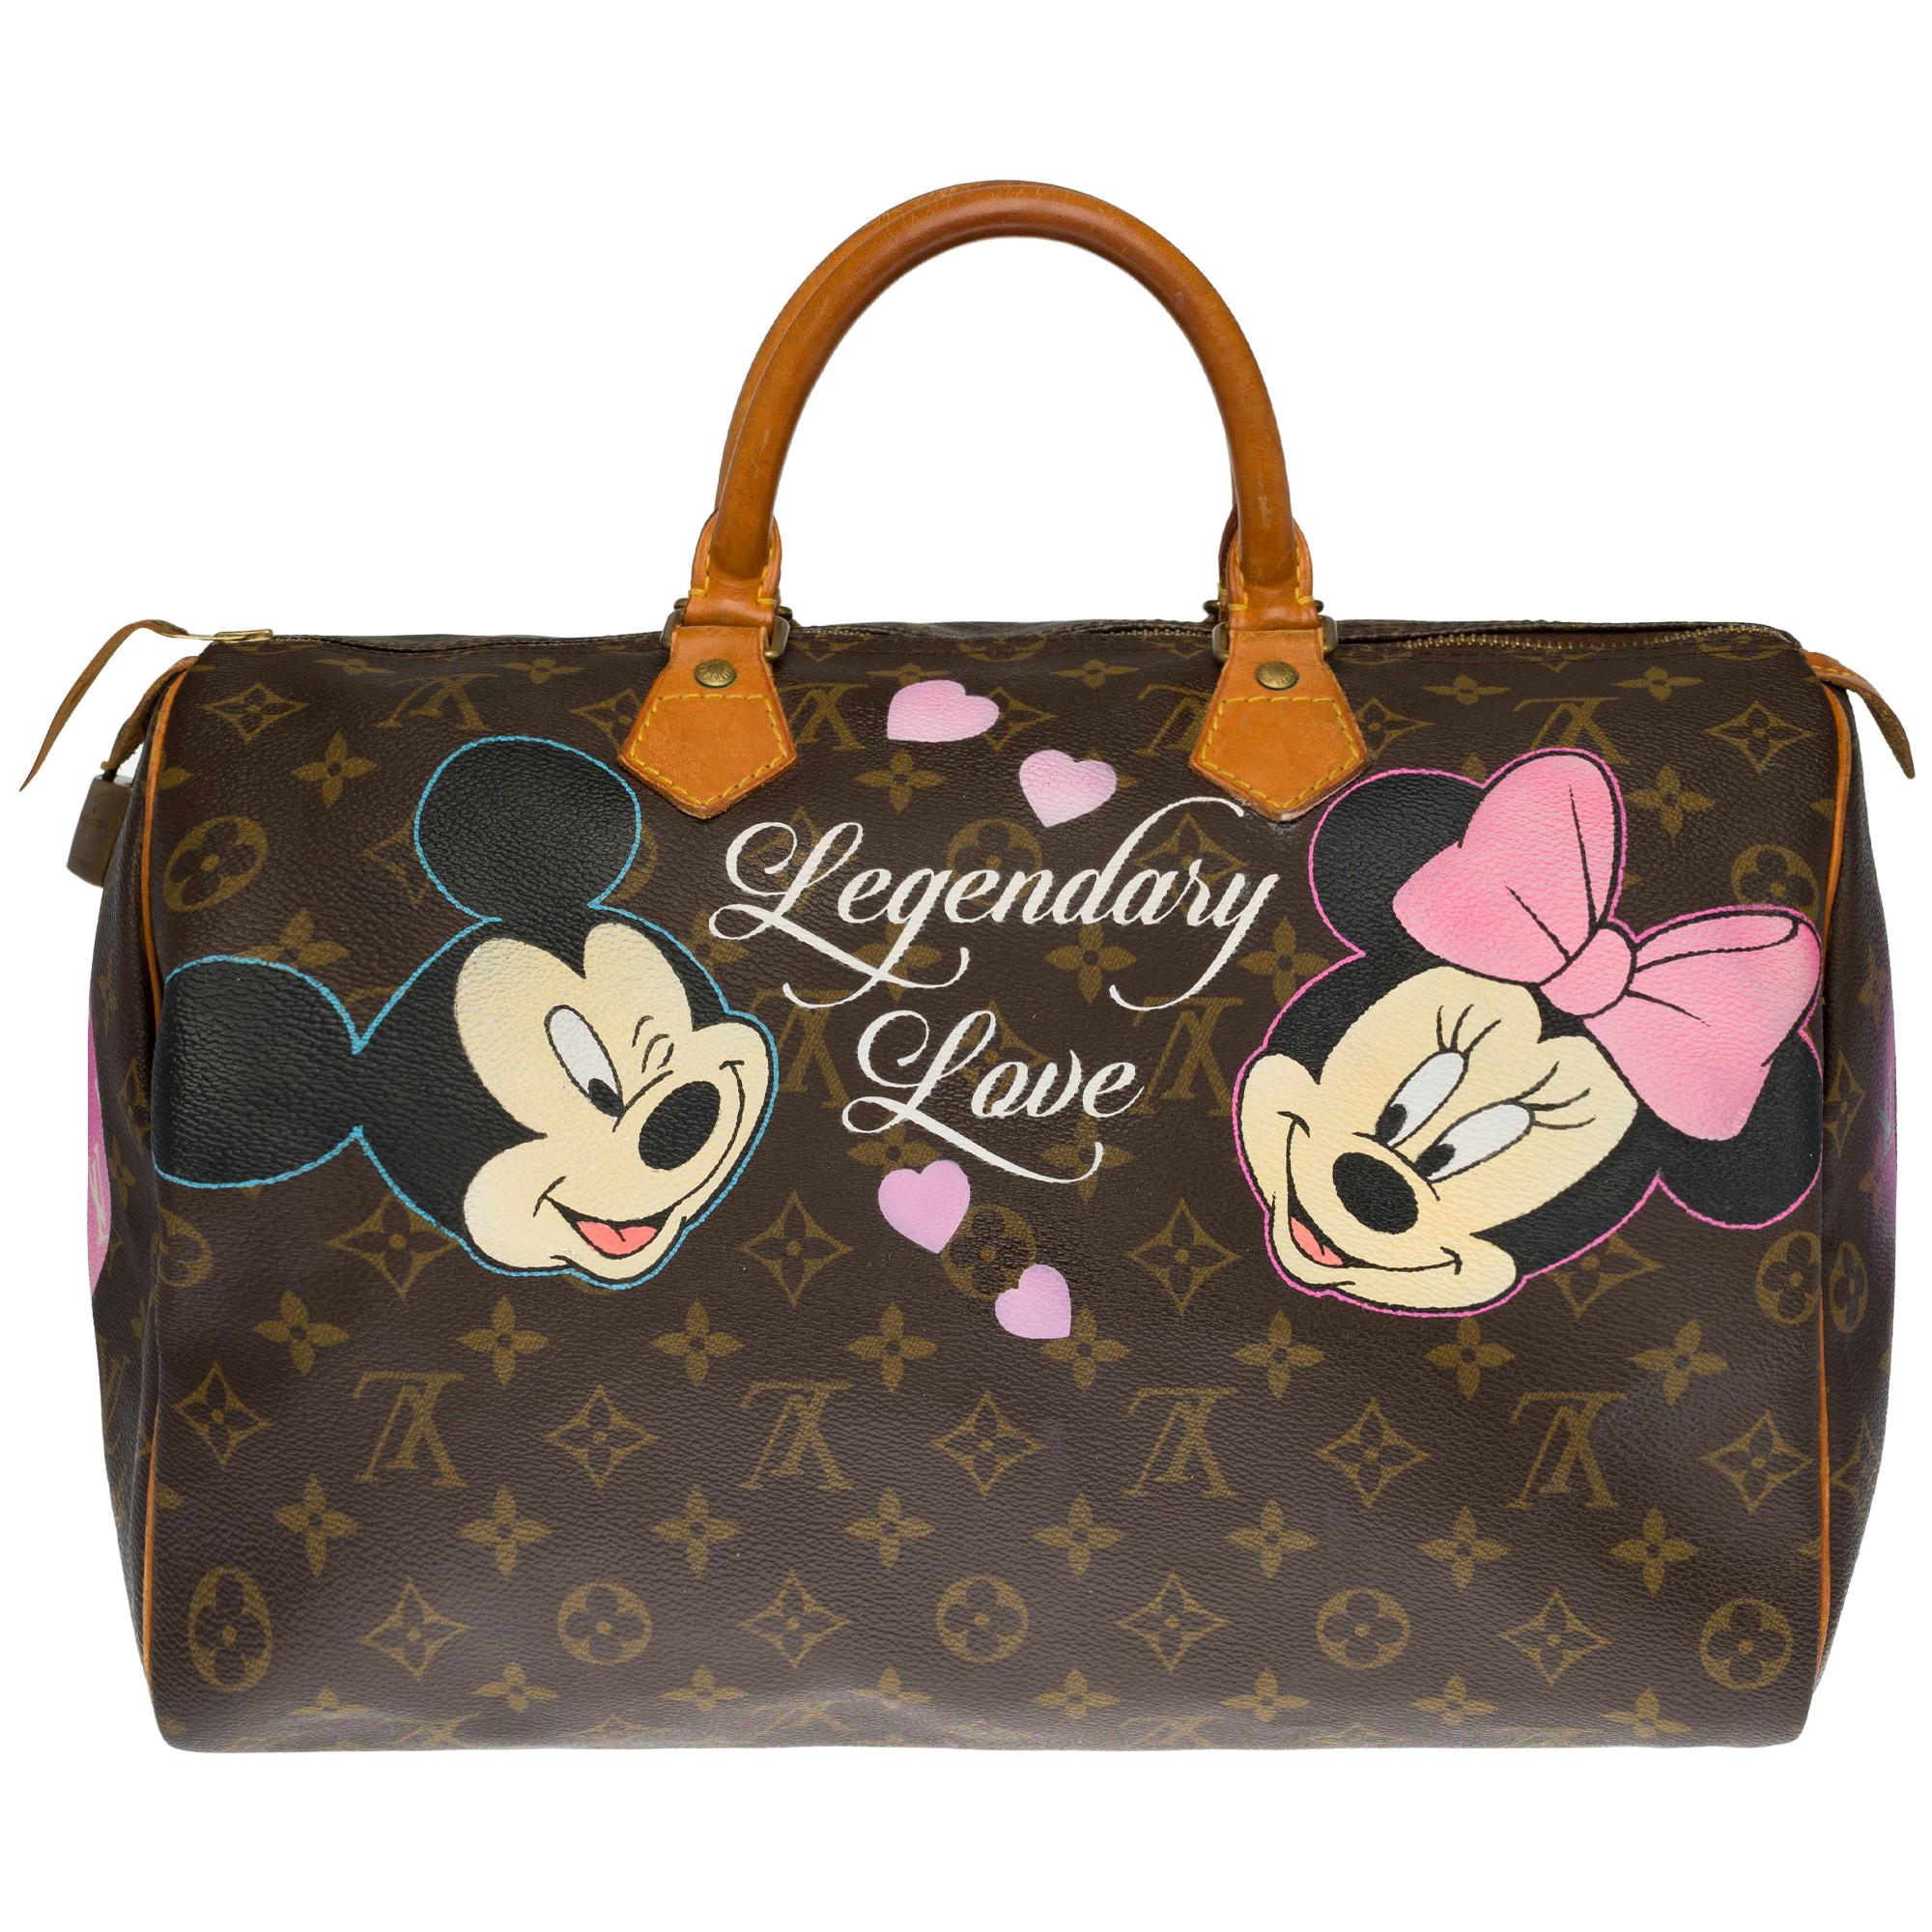 Customized Louis Vuitton Speedy 35 "Legendary Love" handbag in Monogram canvas